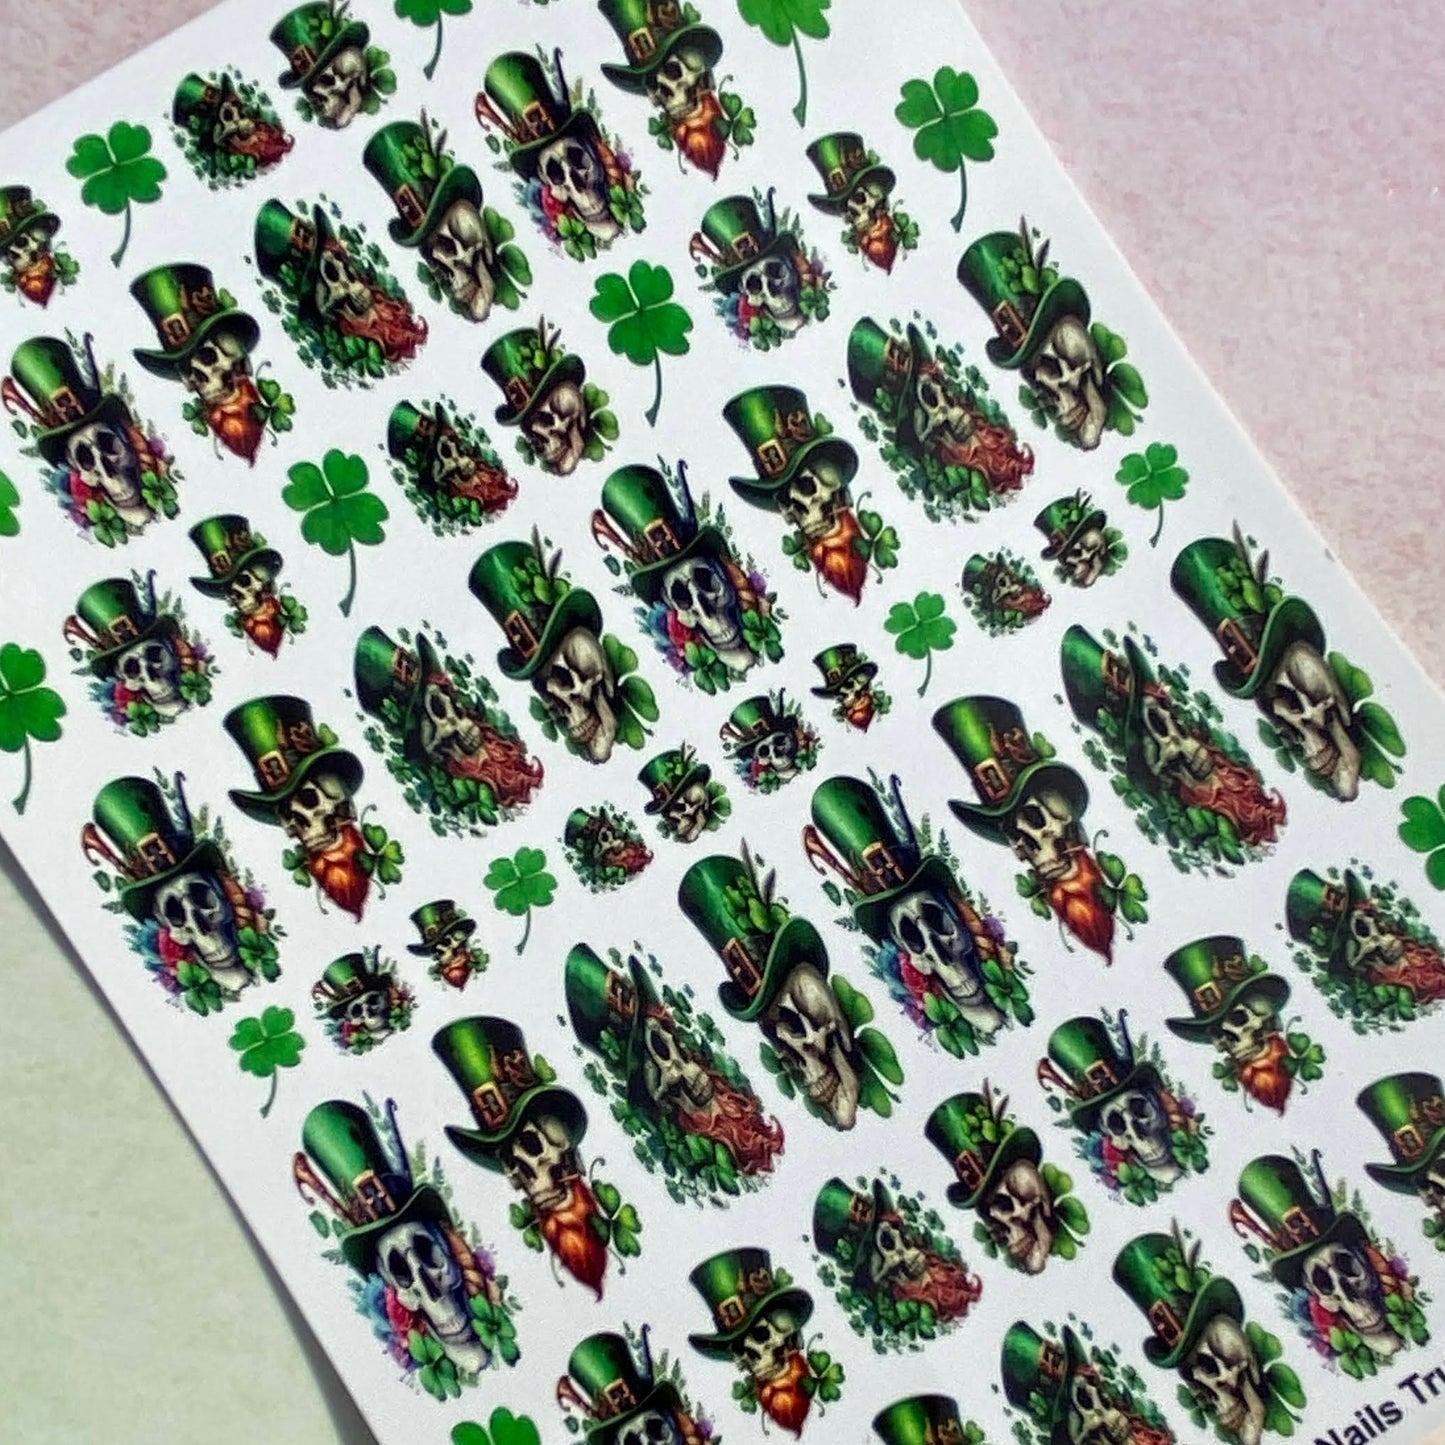 St. Patrick's Day Nail Art - Top Of The Morin’ To Ya